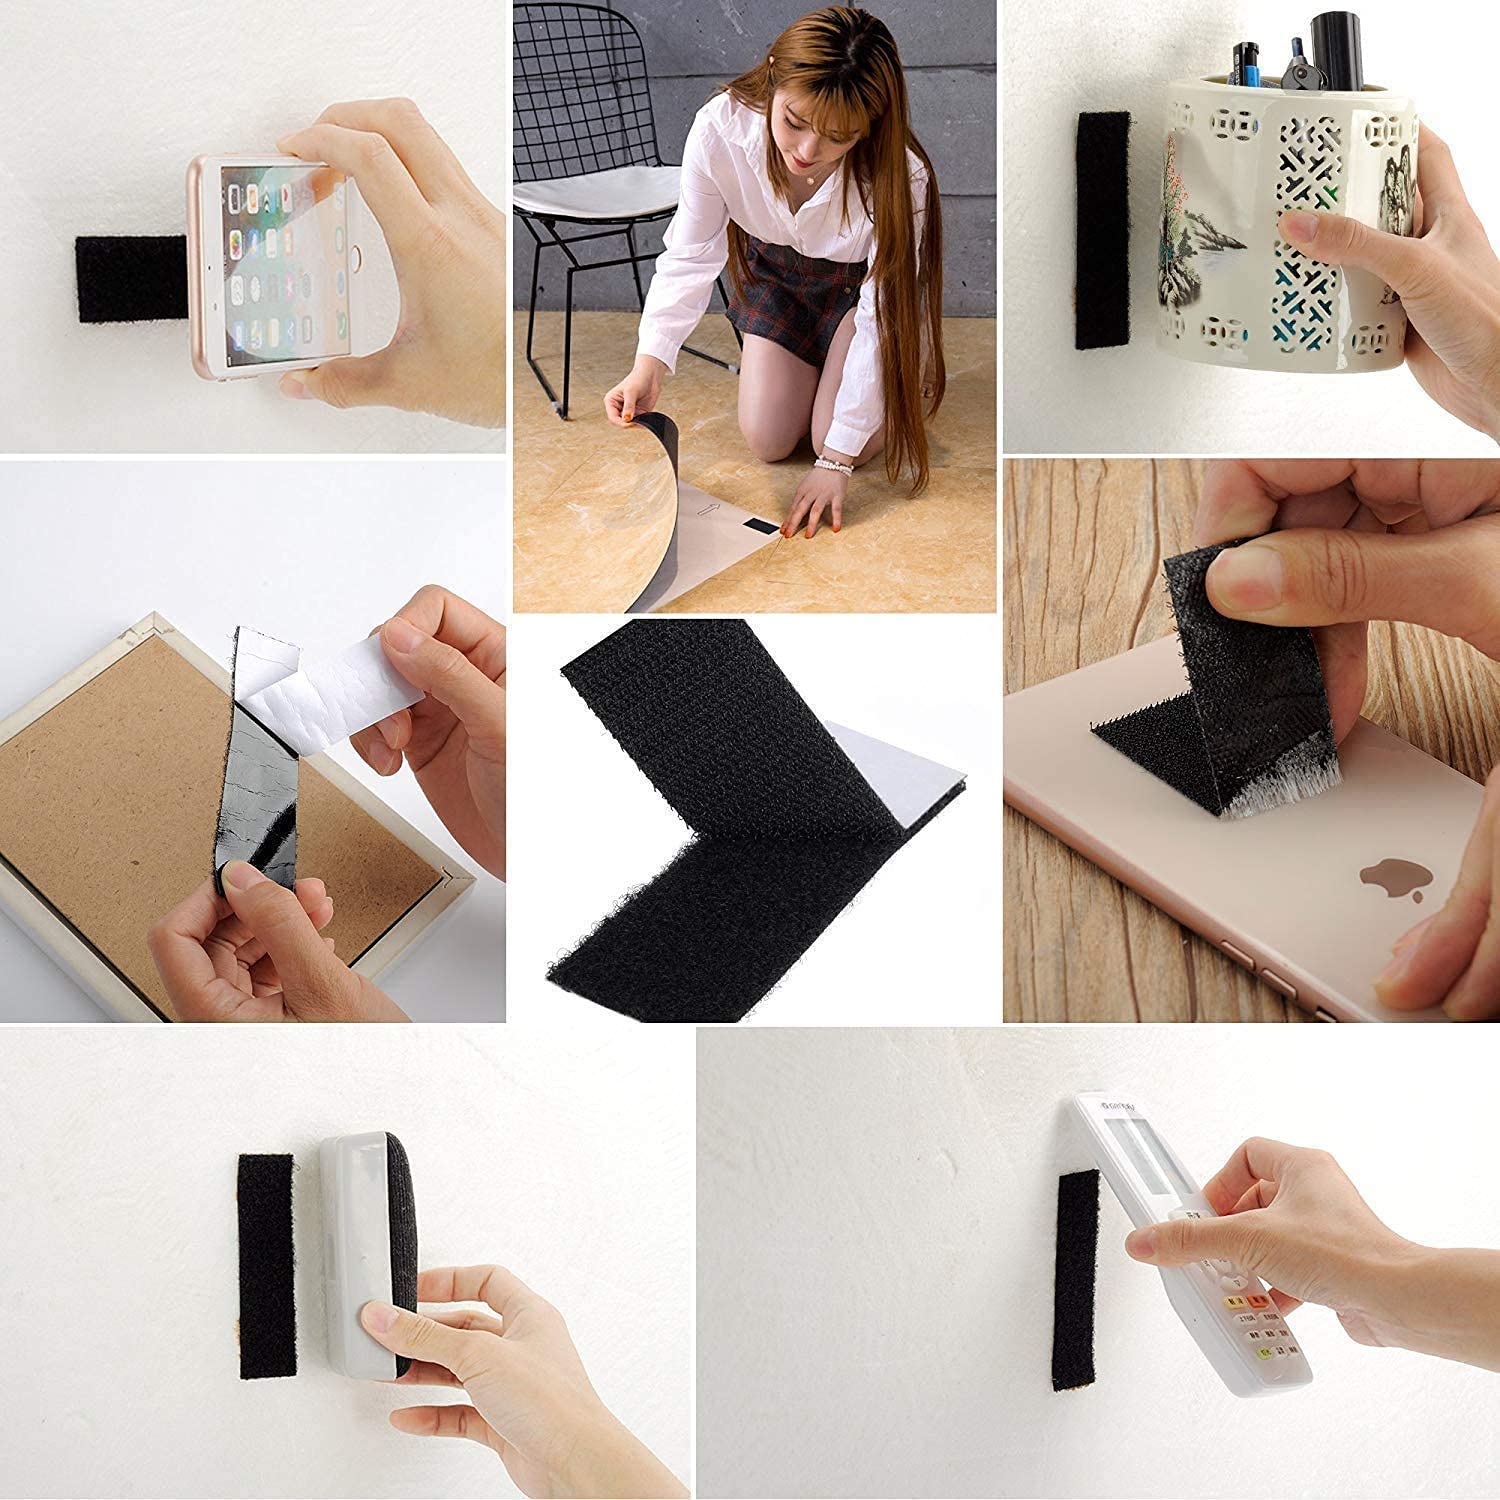 Self Adhesive Hook Tape and Self Adhesive Loop Tape - Black Color (50mm) LifeKrafts